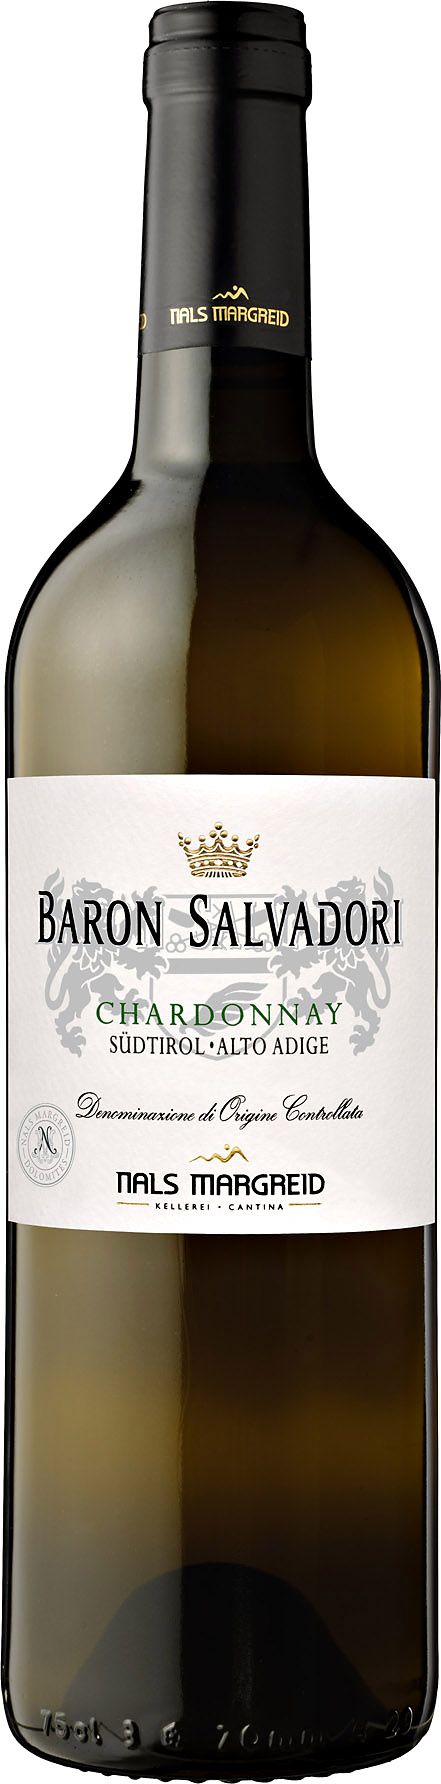 Nals Margreid, Baron Salvadori Chardonnay, 2012